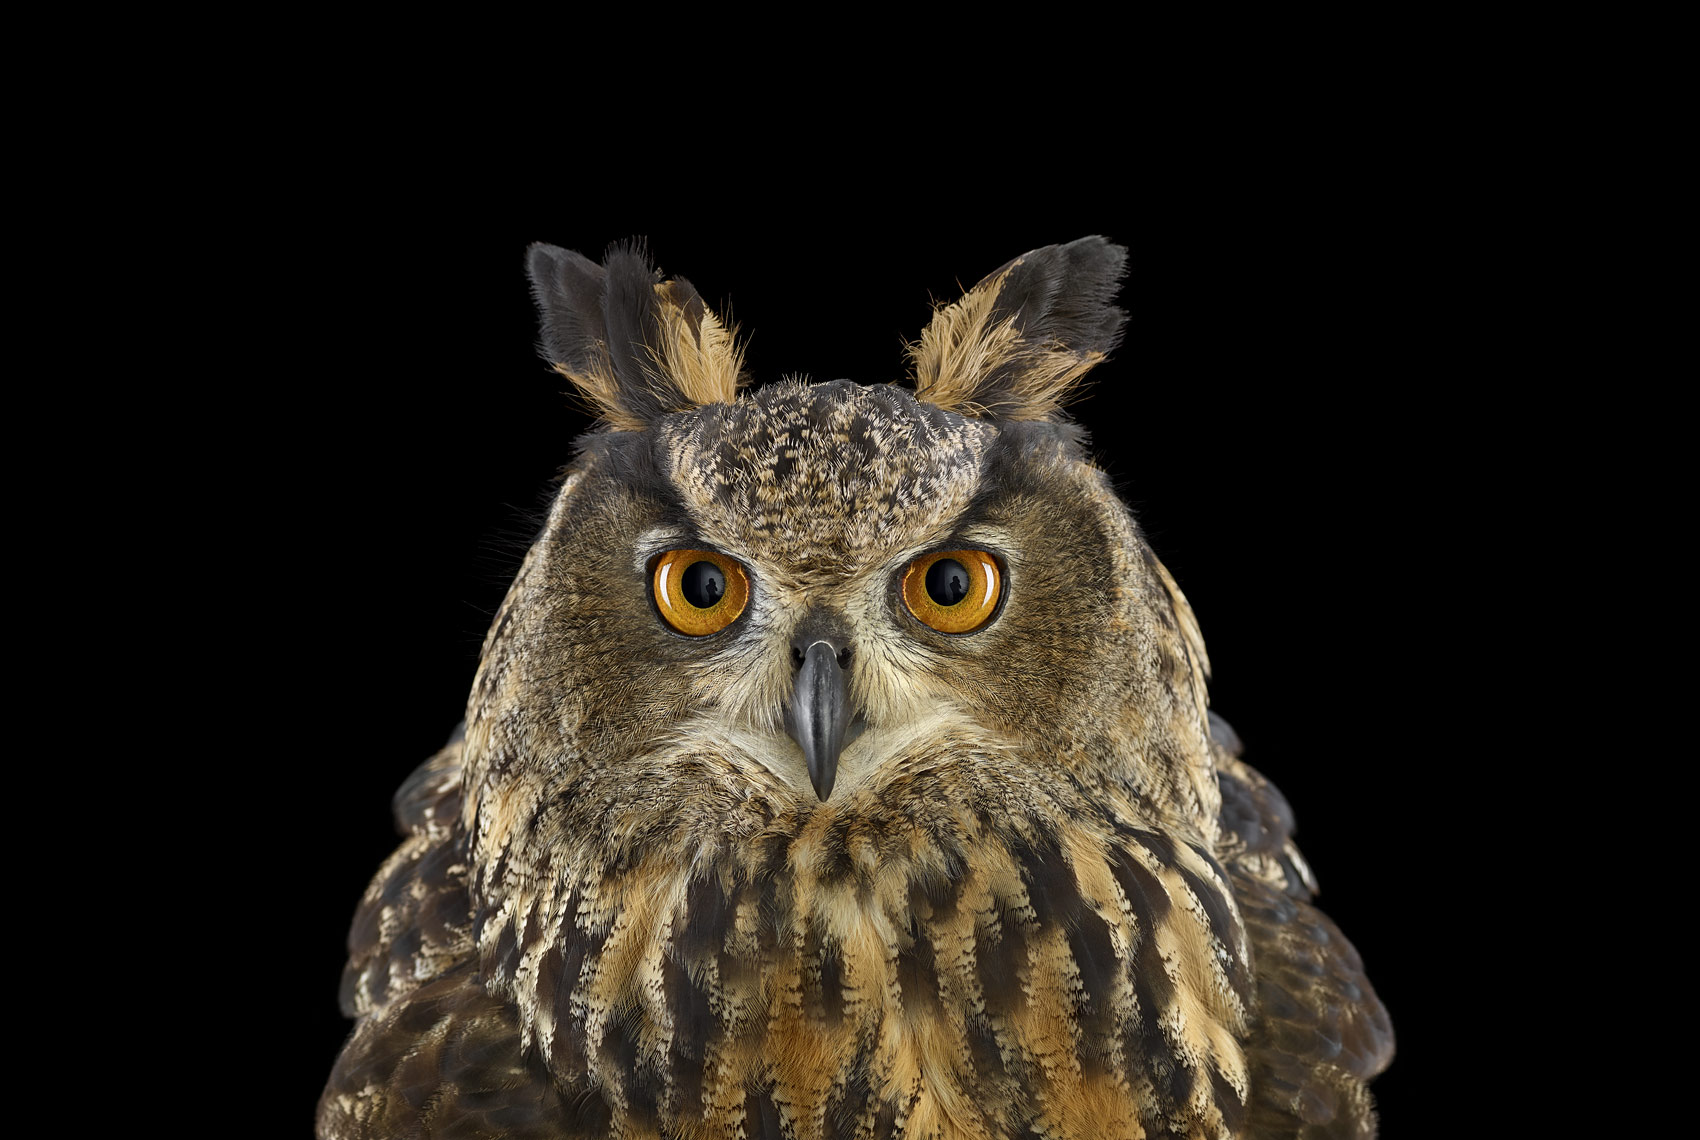 Eurasian eagle owl frontal portrait by fine art wildlife photographer Brad Wilson